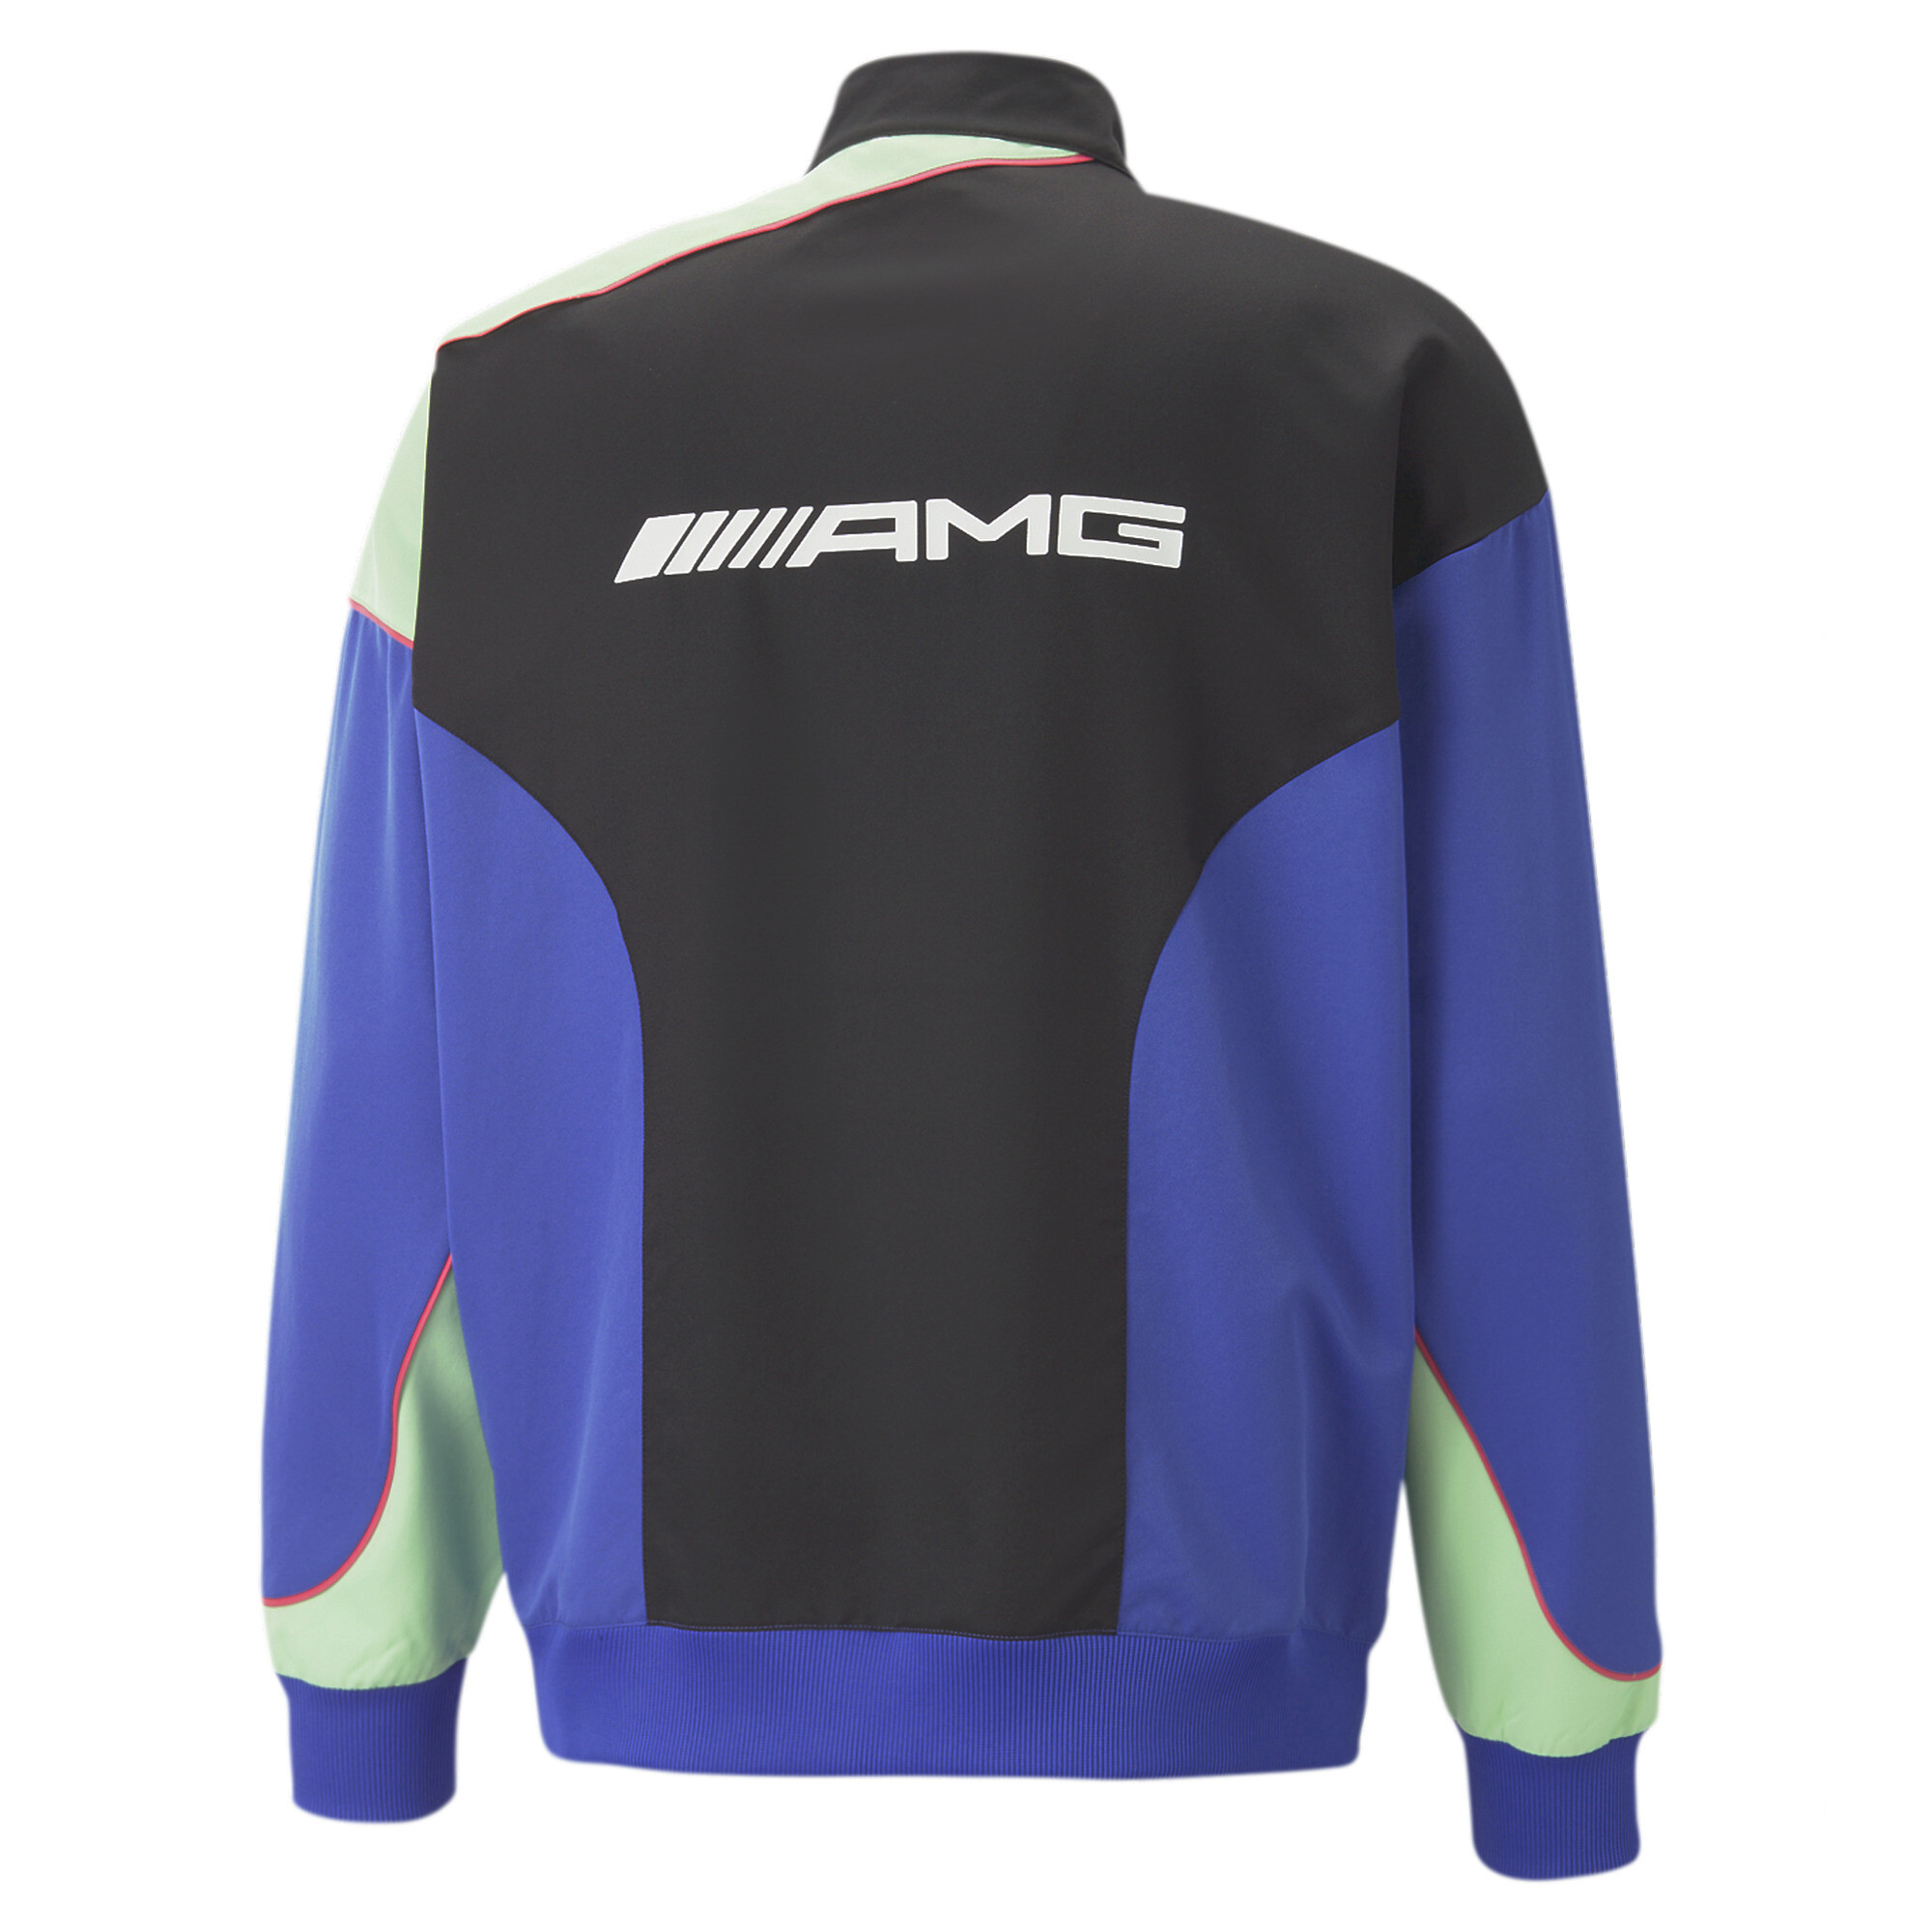 Men's PUMA Mercedes-AMG Motorsport Woven Jacket Men In Blue, Size Small